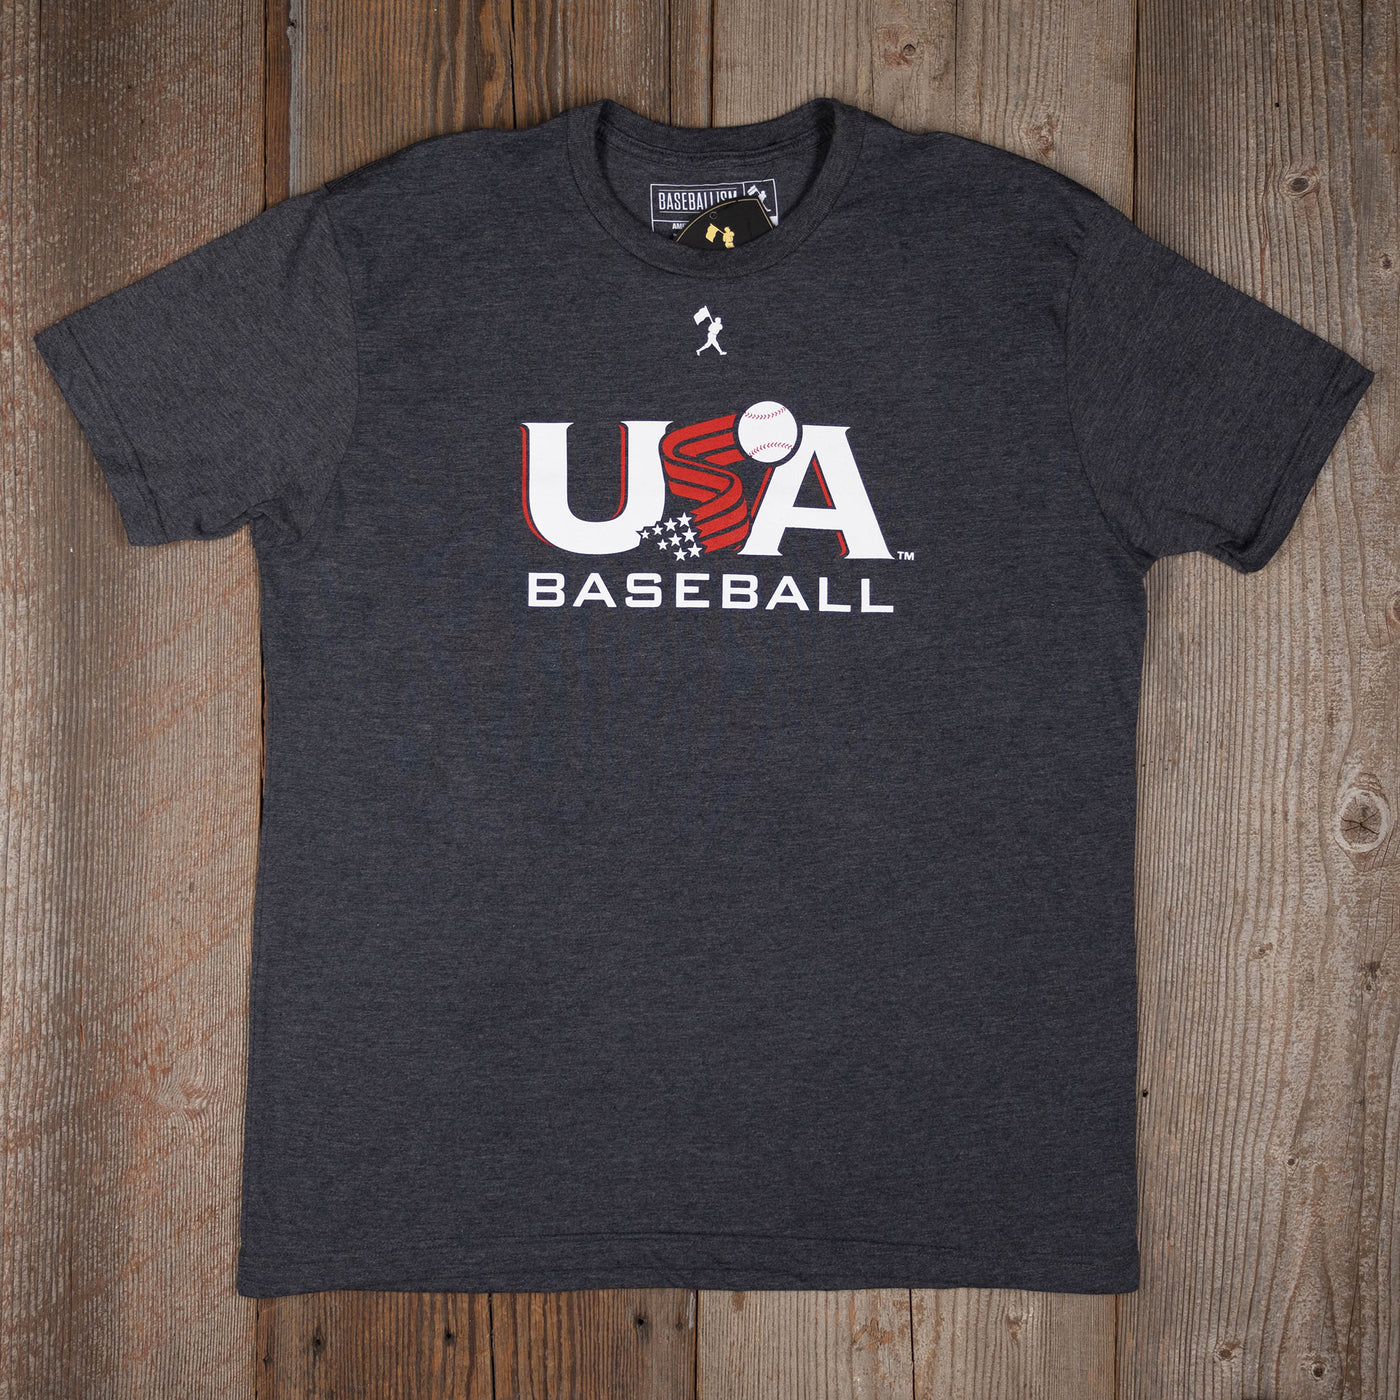 Baseballism x USA Baseball - Charcoal